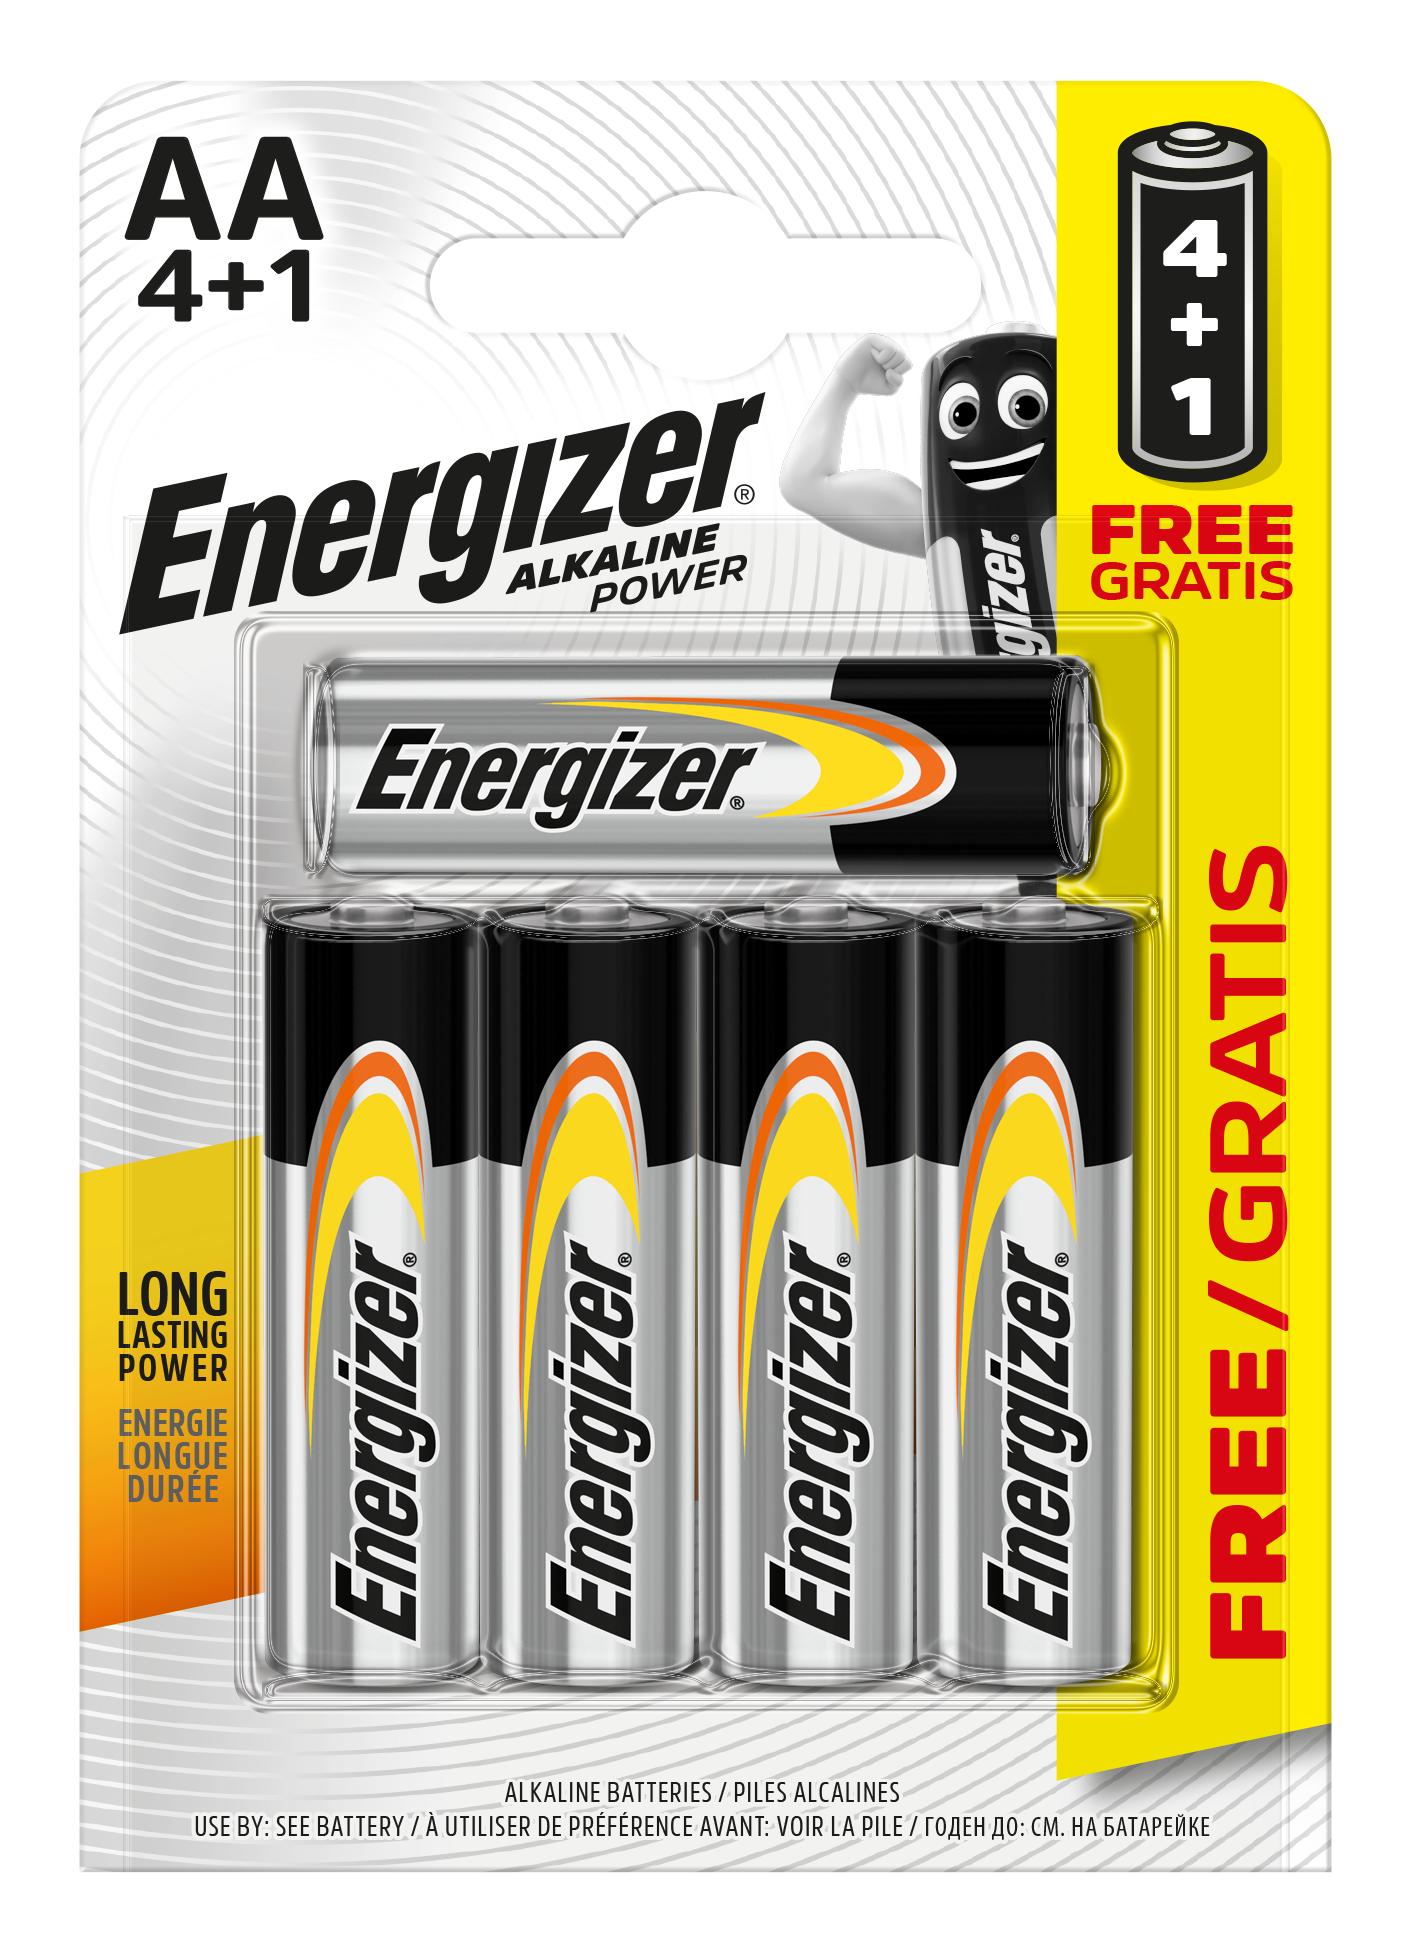 Energizer AA Alkaline Power, Pack of 4+1